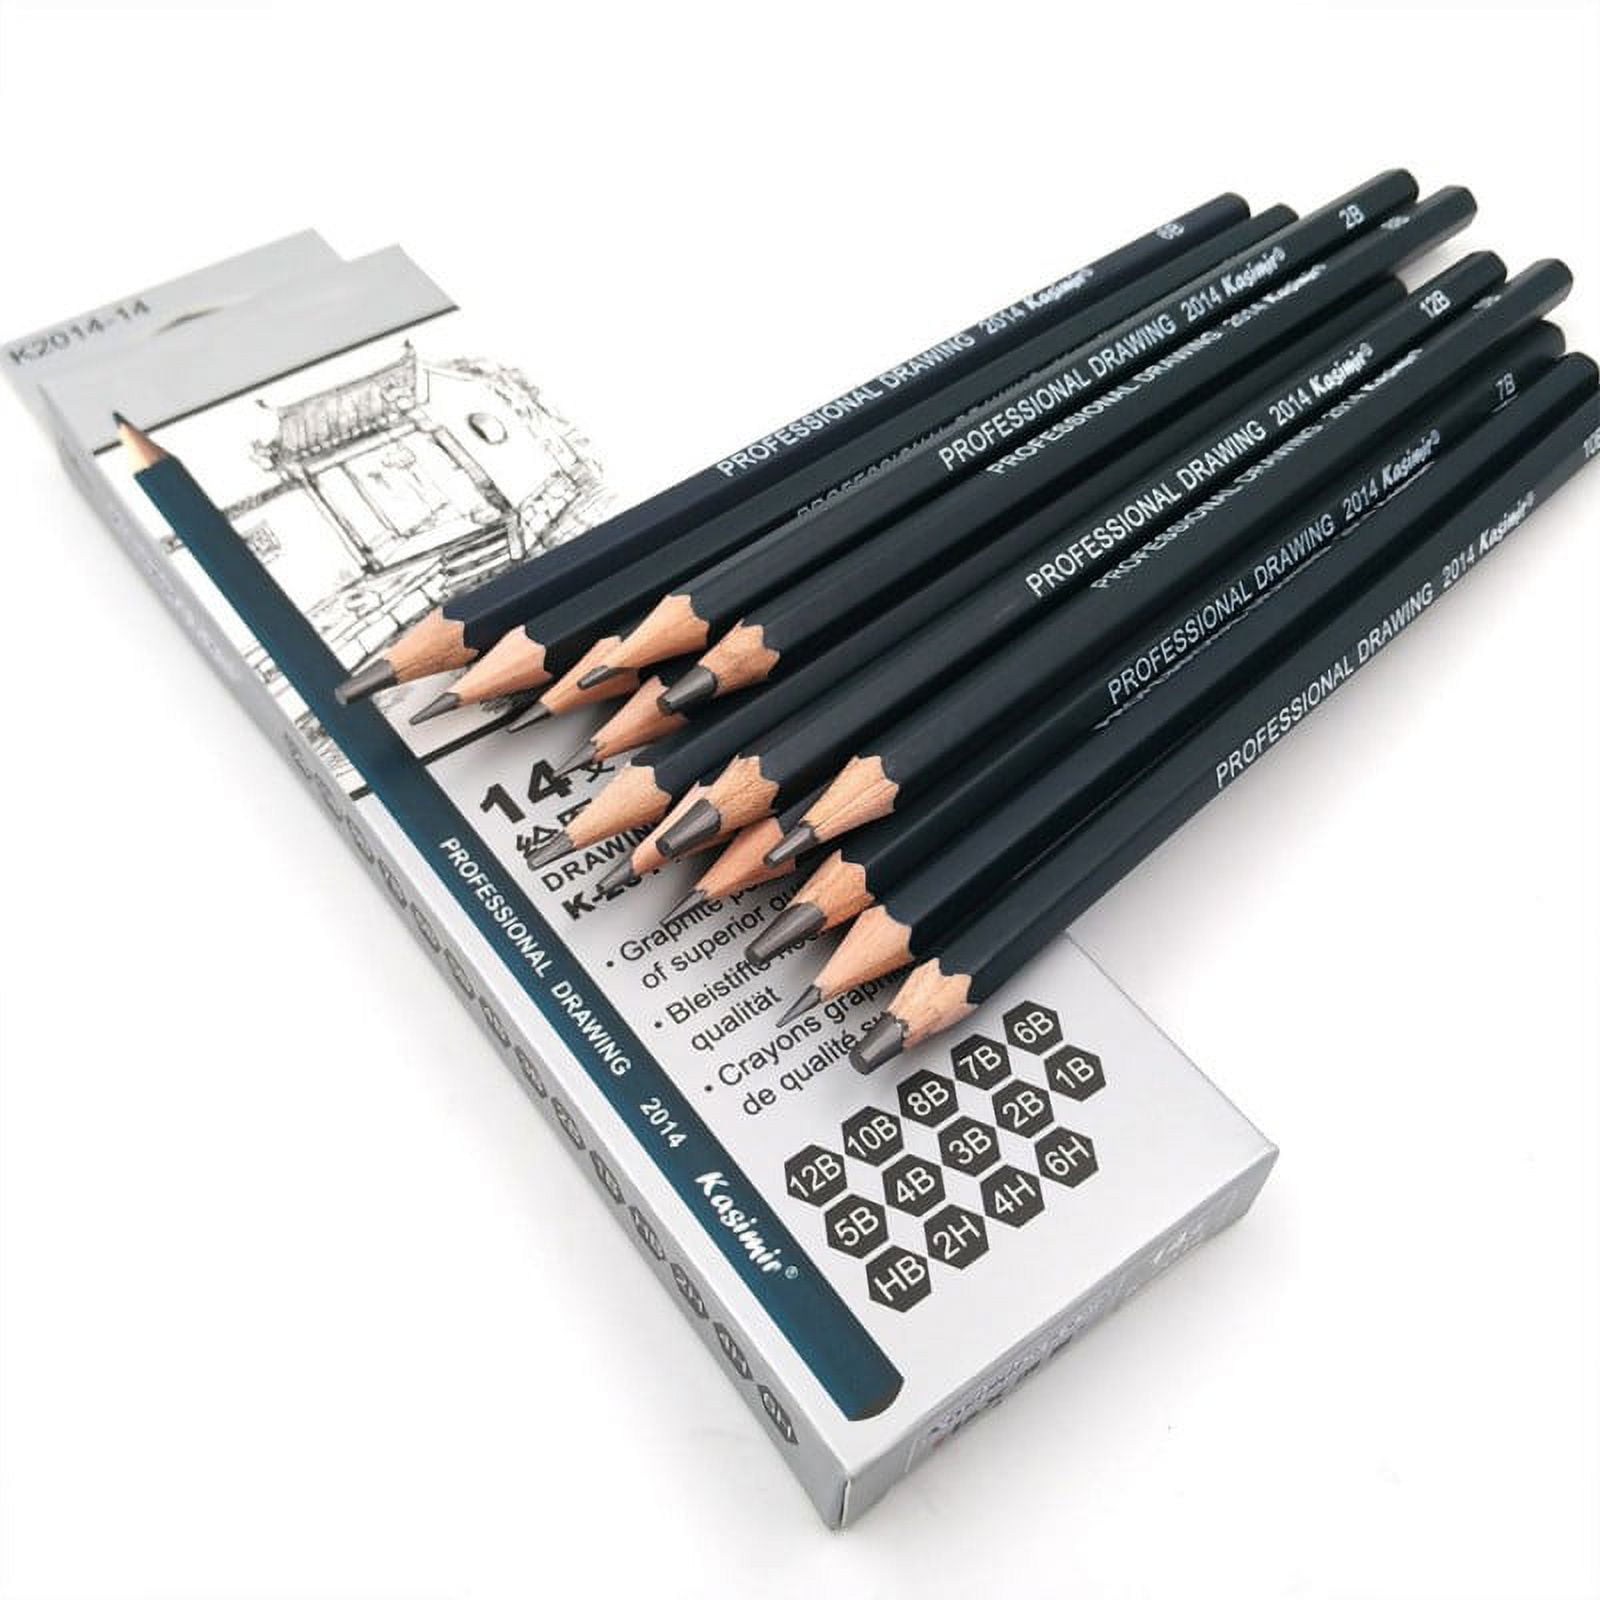 Artist Sketch Pencil Drawing Pencils Set, 12 Piece, Sketching Pencils 3H,  2H, H, HB, 2B, 3B, 4B, 5B, 6B, 7B, 8B, 9B Graphite Pencils for Master level